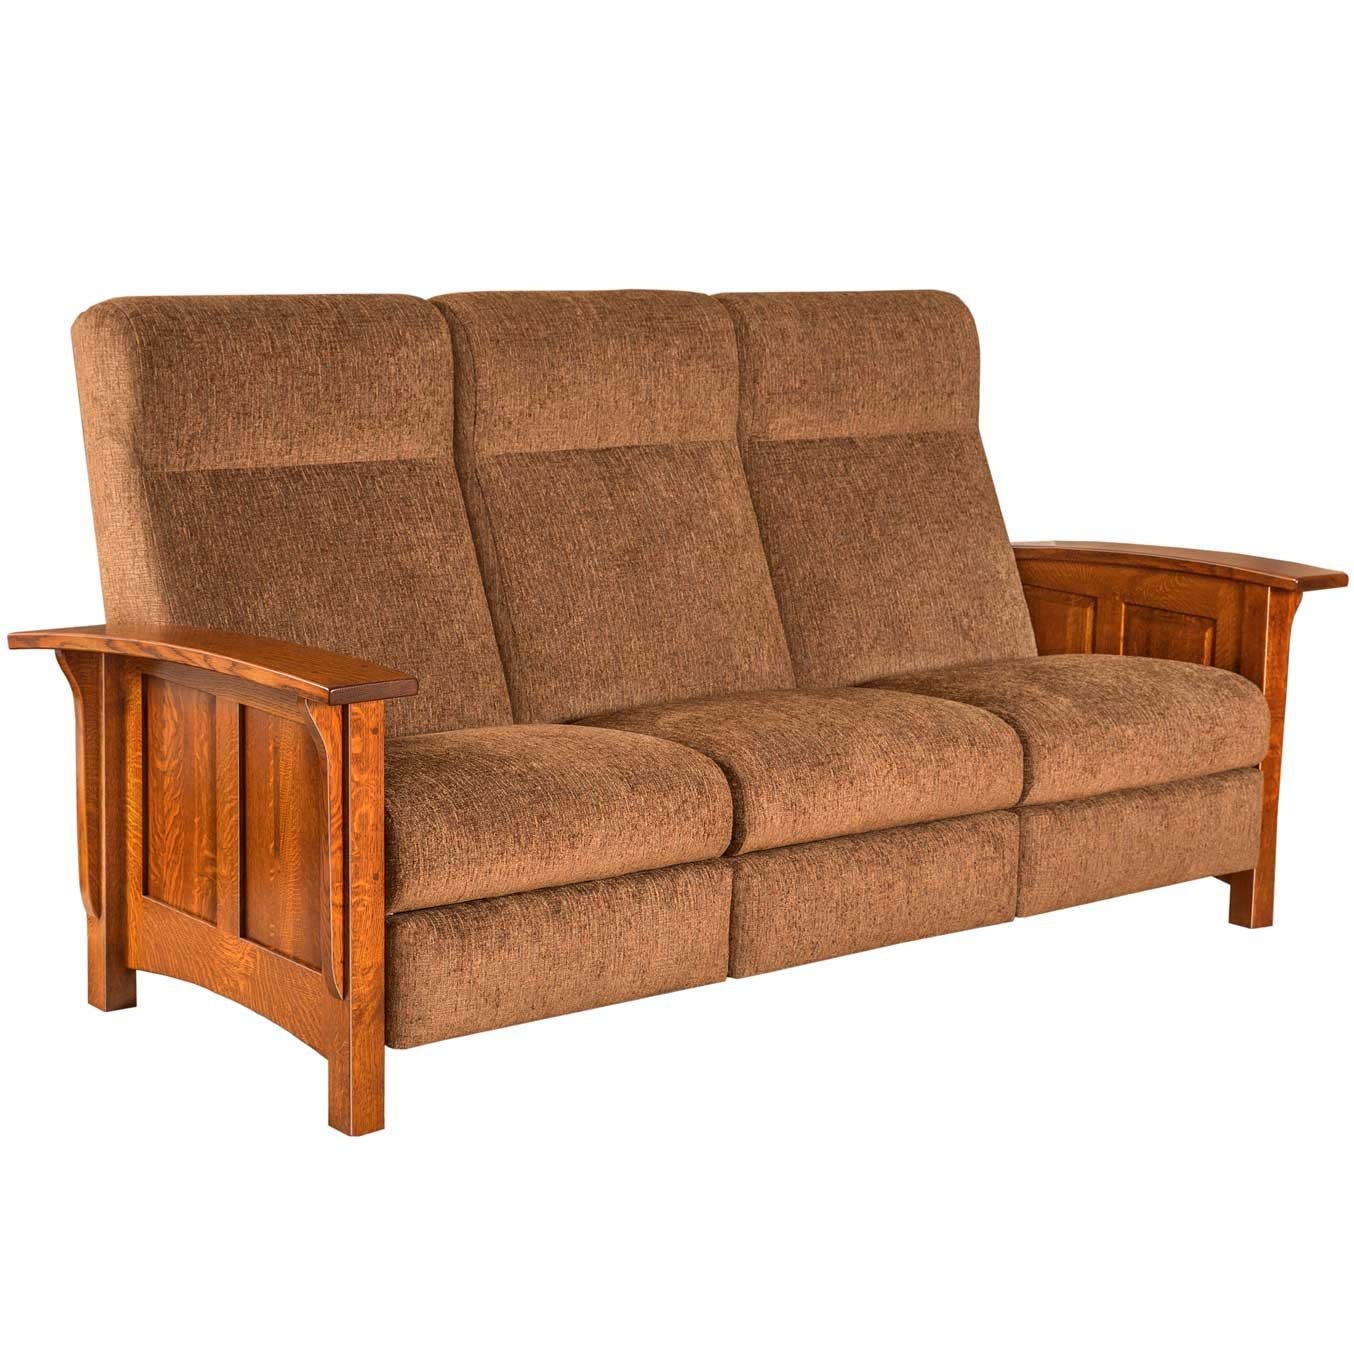 Amish Craftsman Paneled Mission Recliner Sofa - snyders.furniture